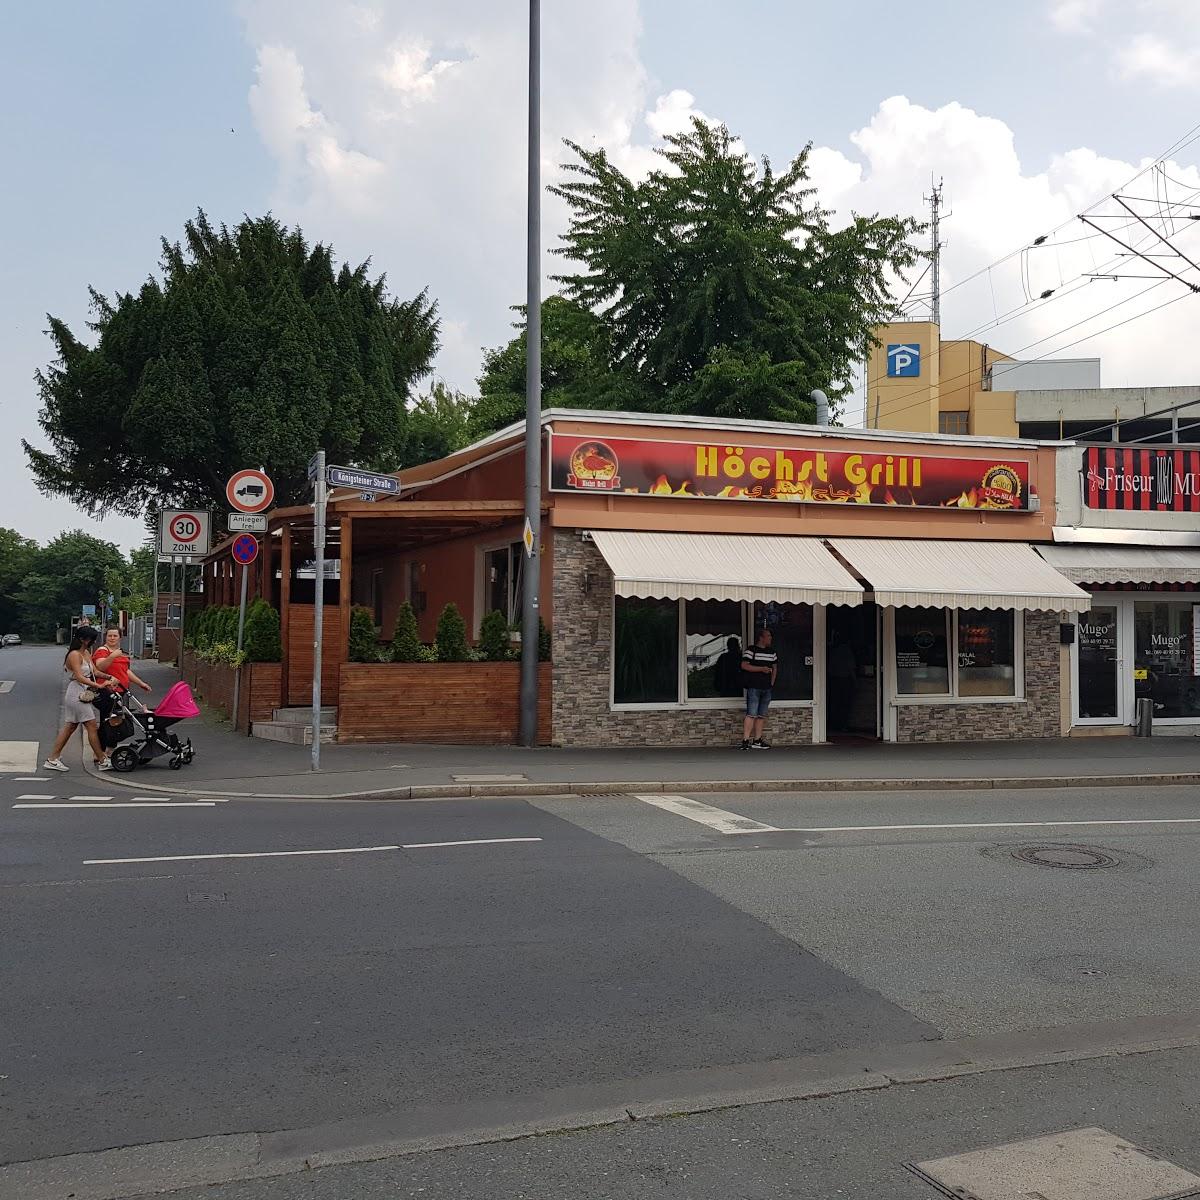 Restaurant "Höchst Grill" in Frankfurt am Main